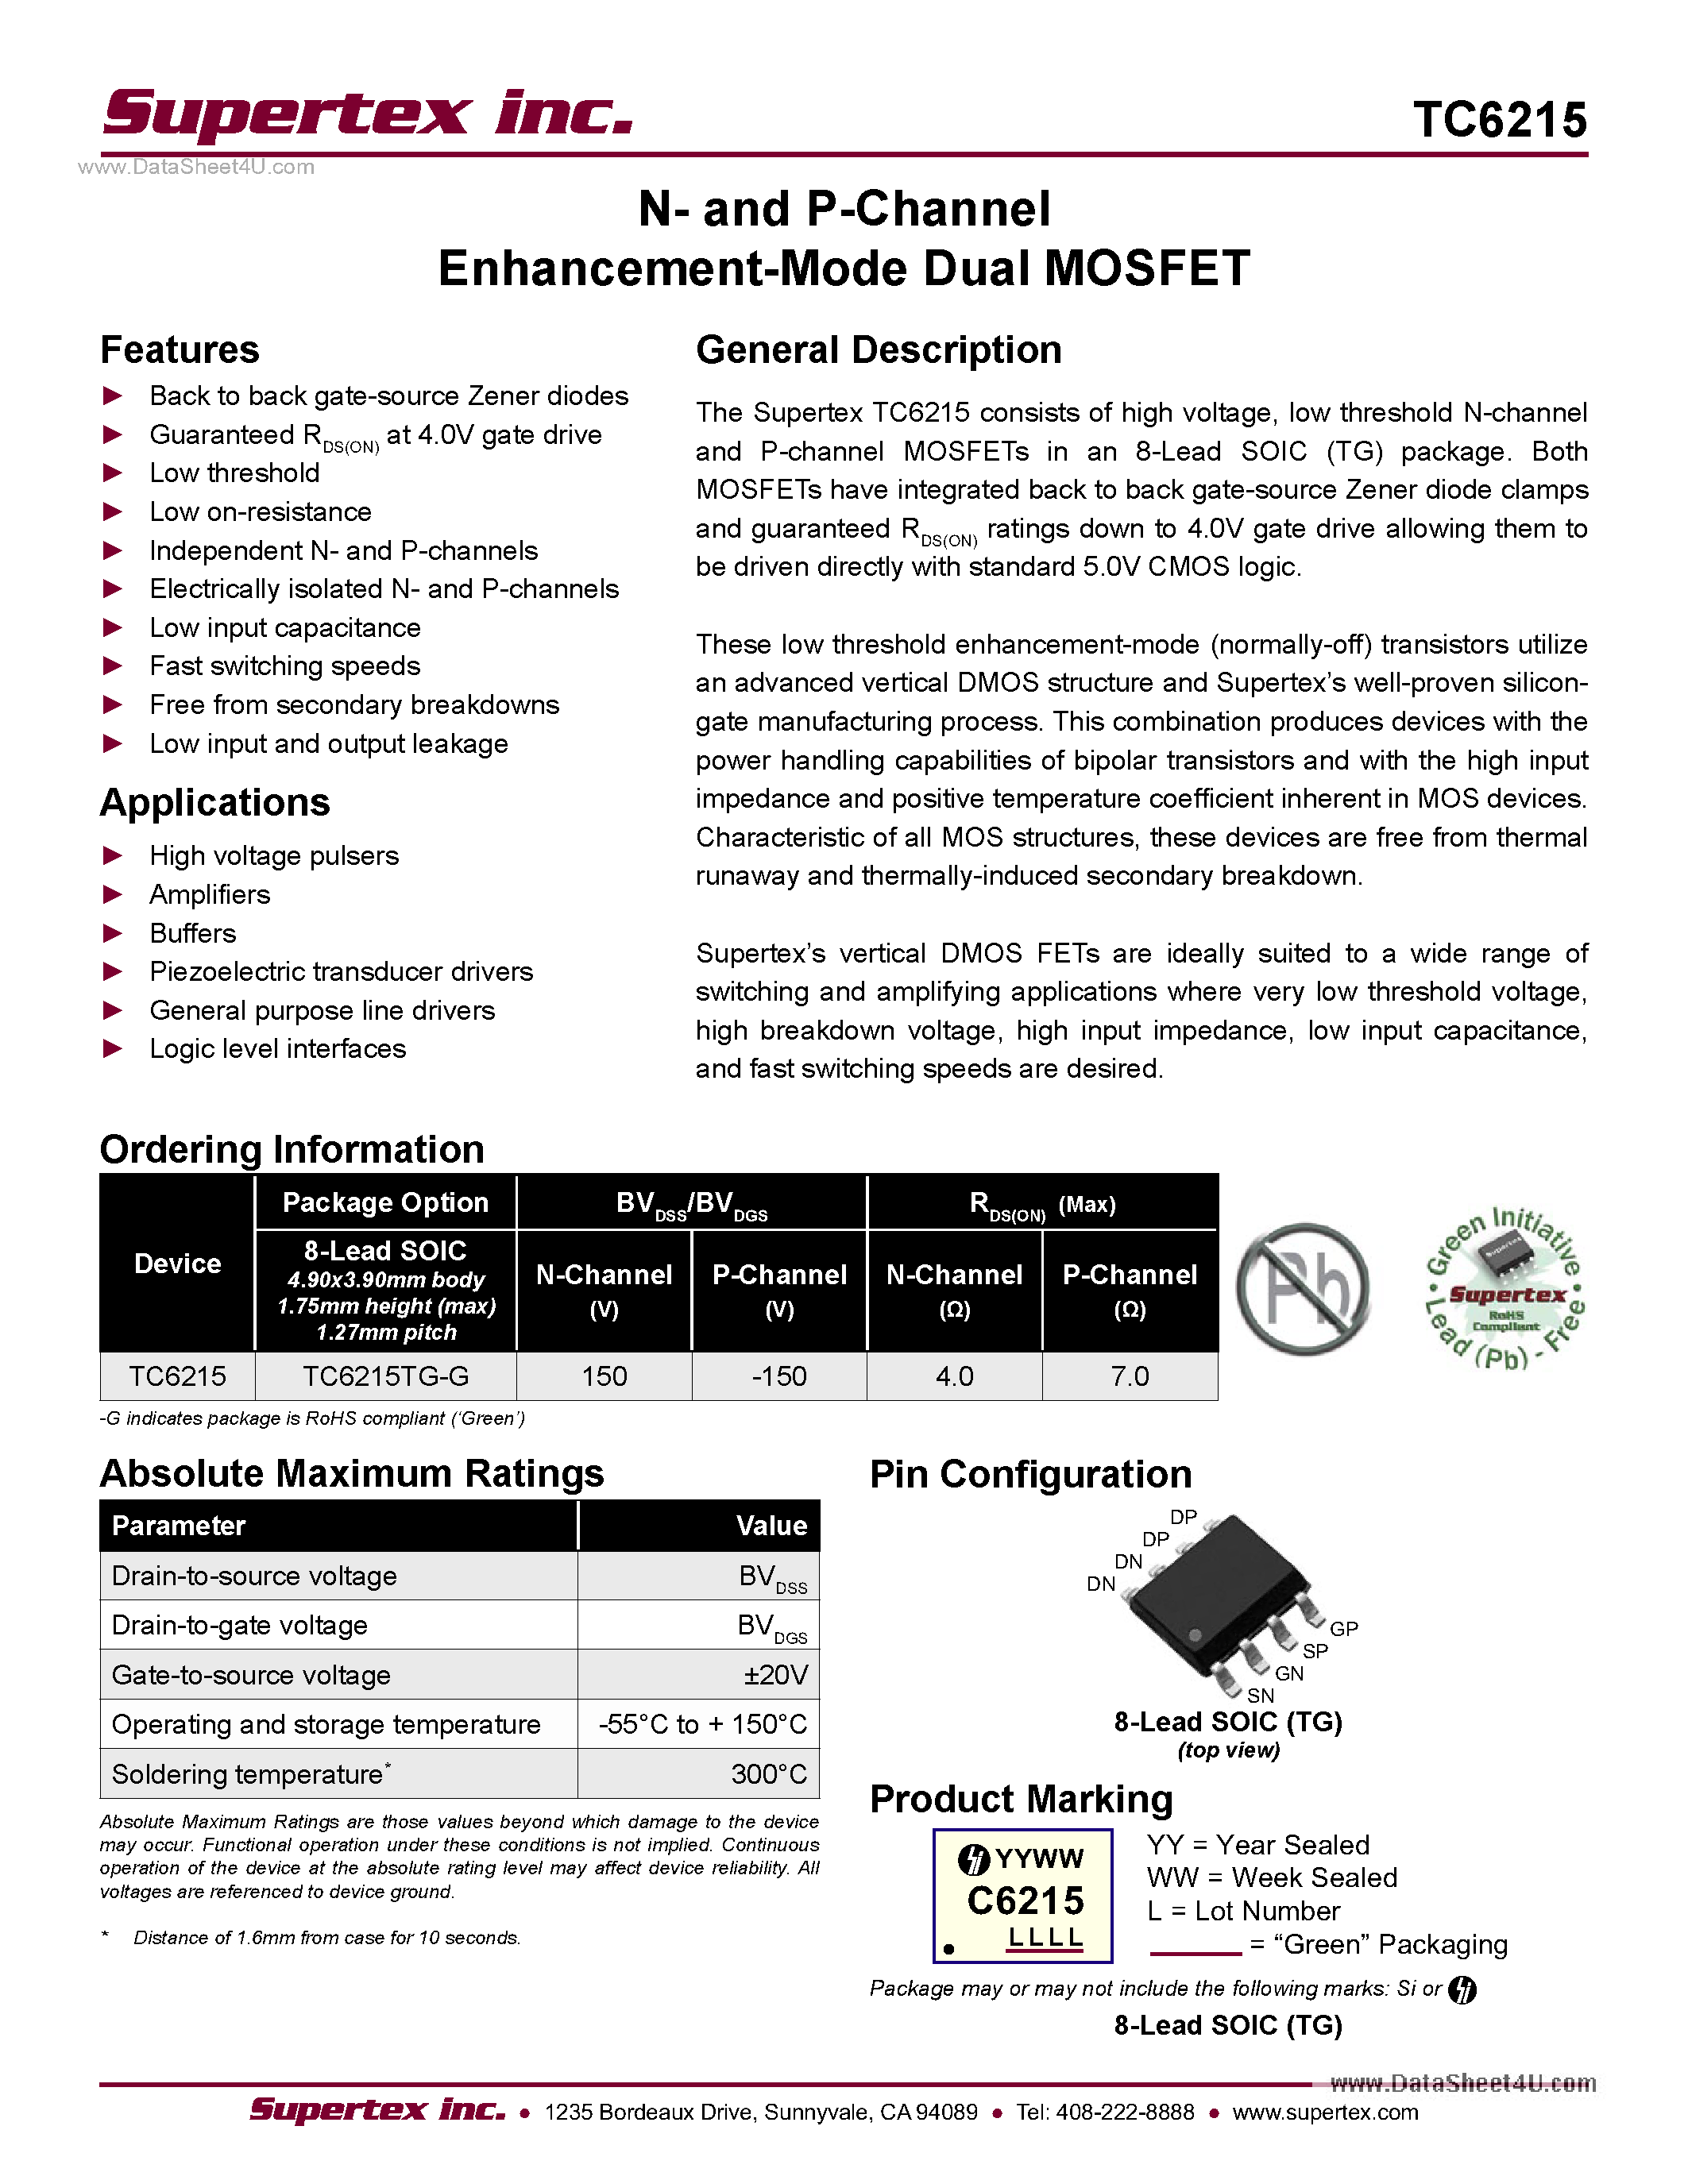 Даташит TC6215 - Enhancement-Mode Dual MOSFET страница 1